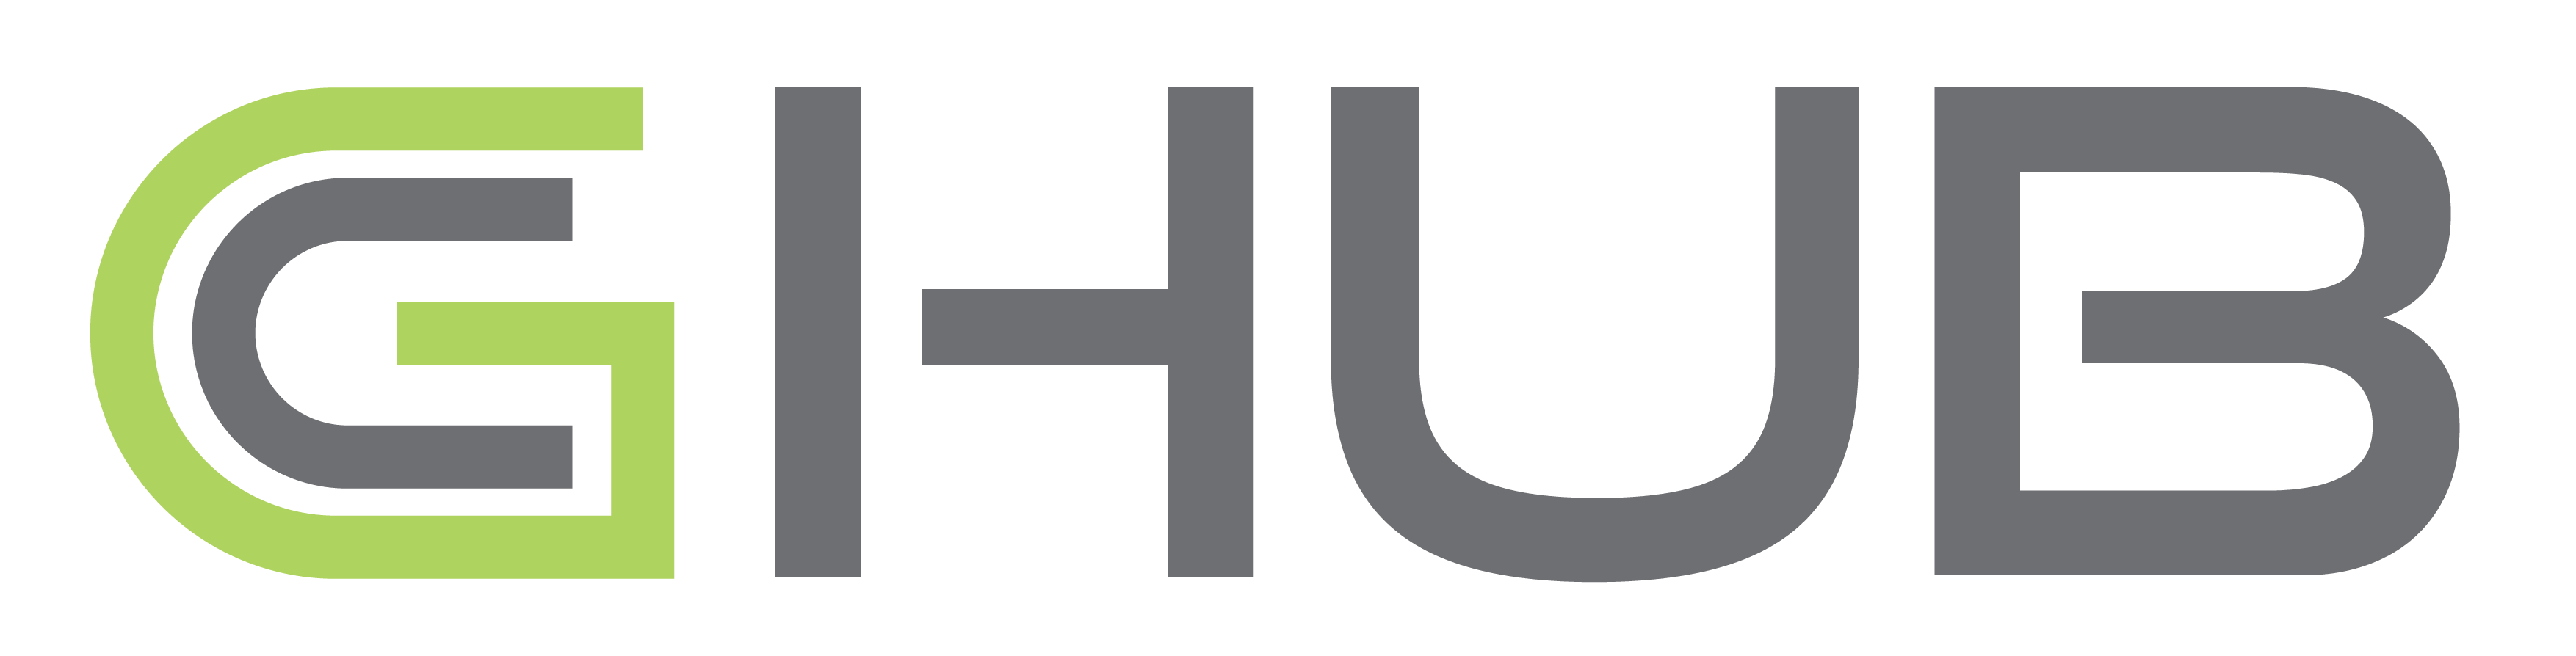 The Gold Coast Hub logo